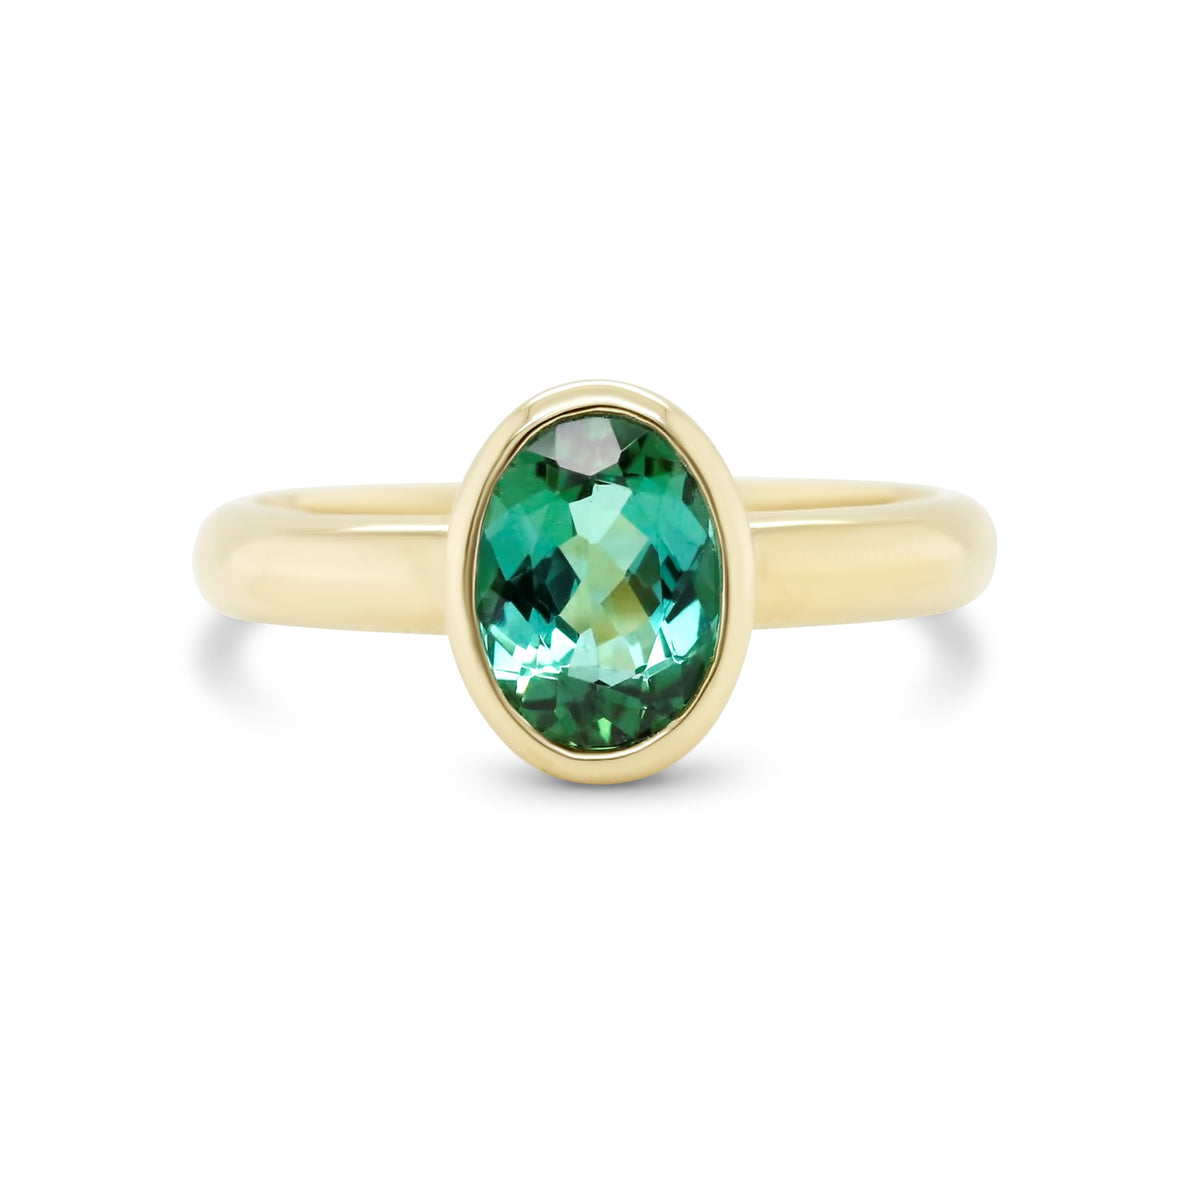 14k yellow gold bezel set oval green tourmaline gemstone ring